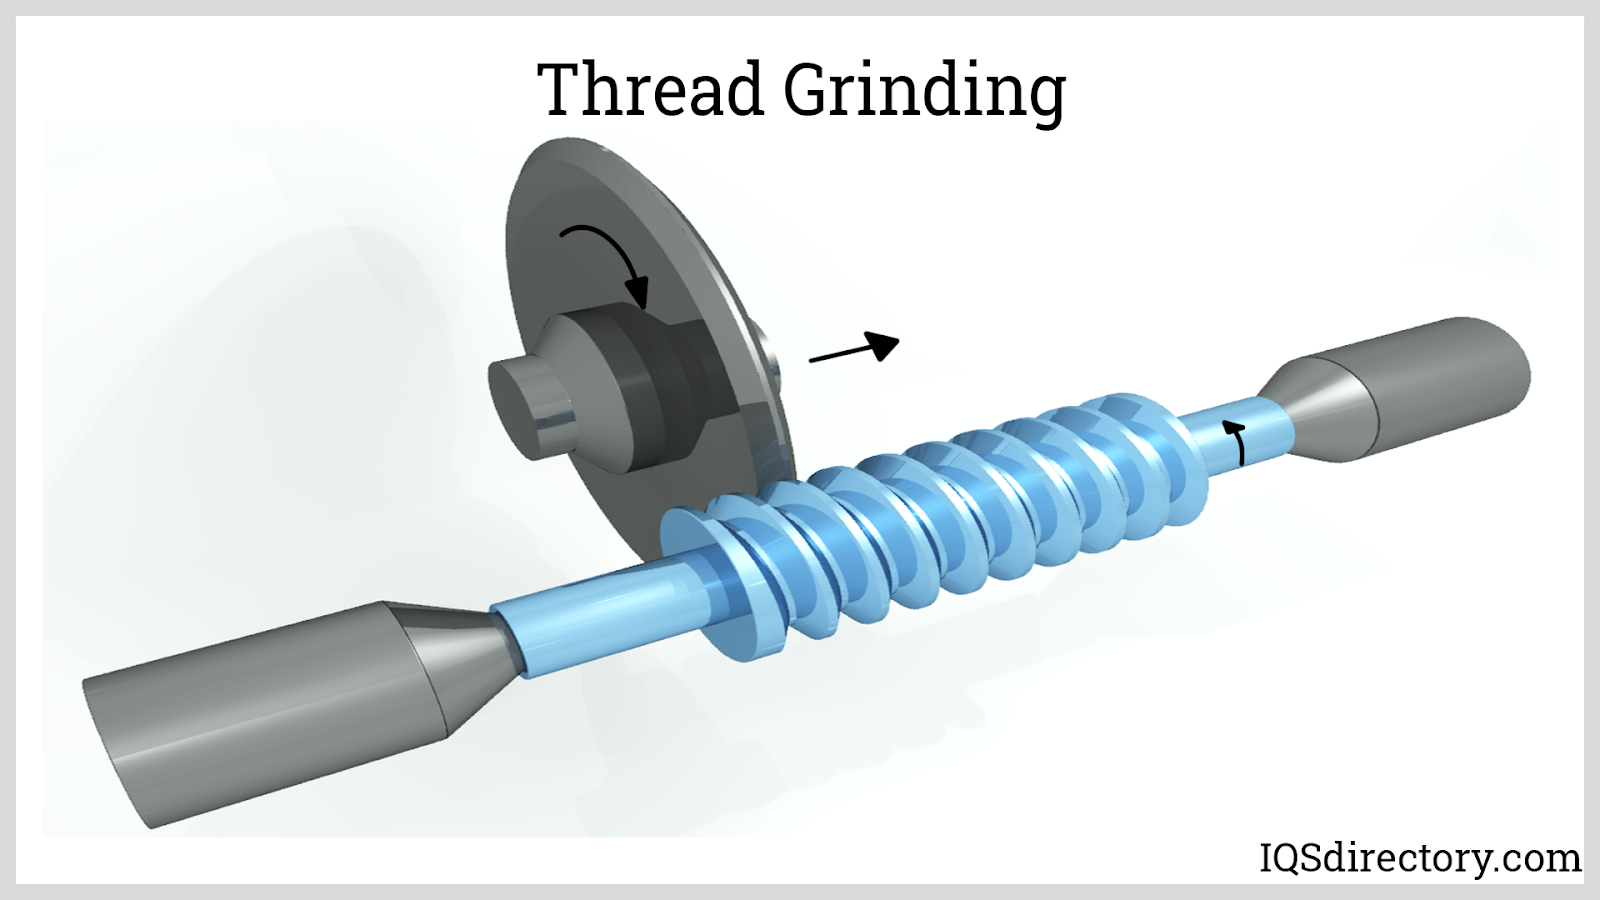 Thread Grinding